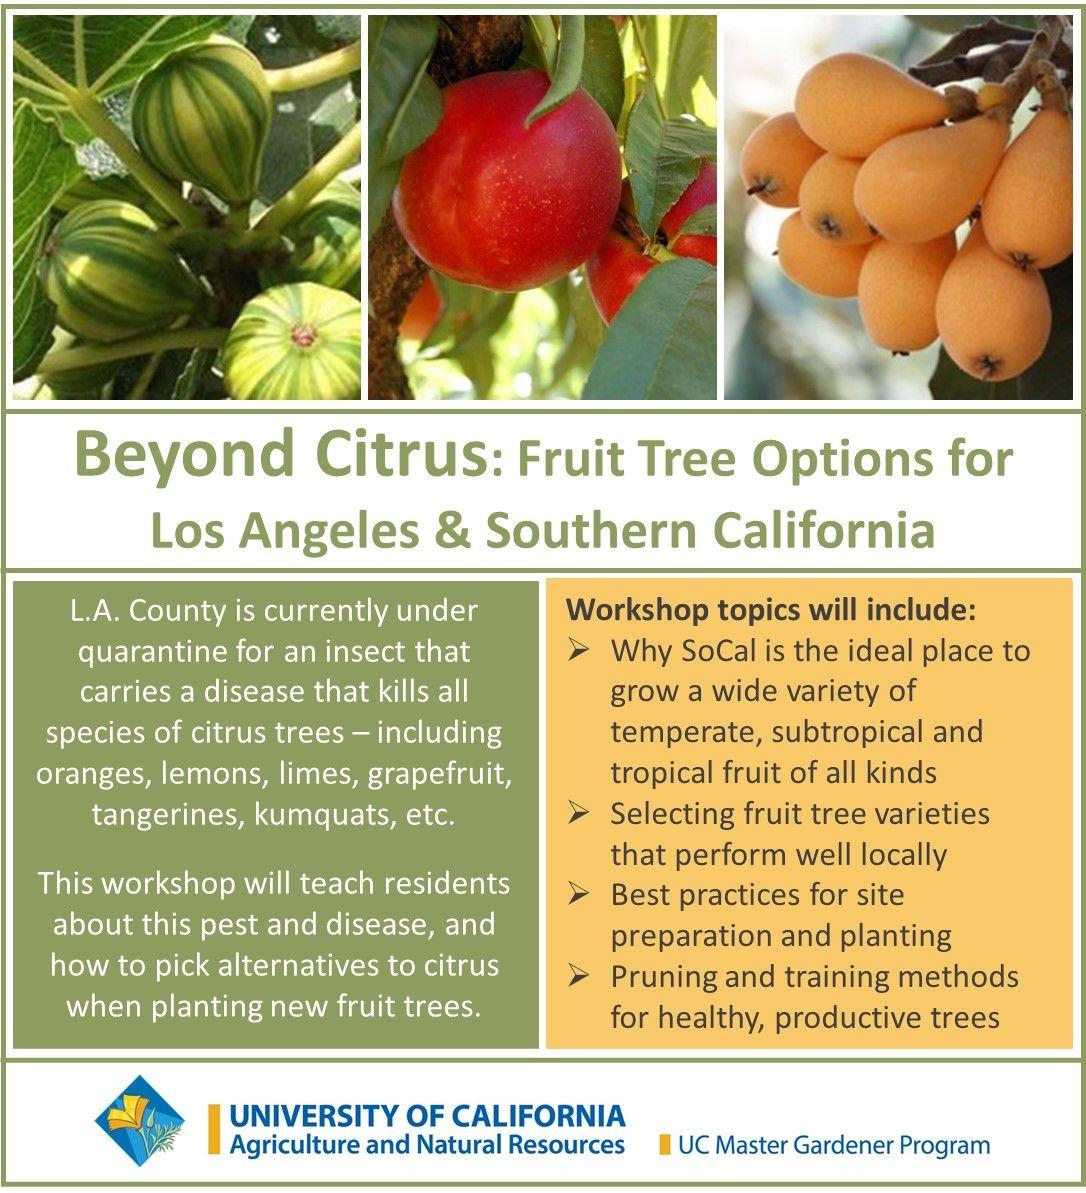 Beyond Citrus - Fruit Tree Options